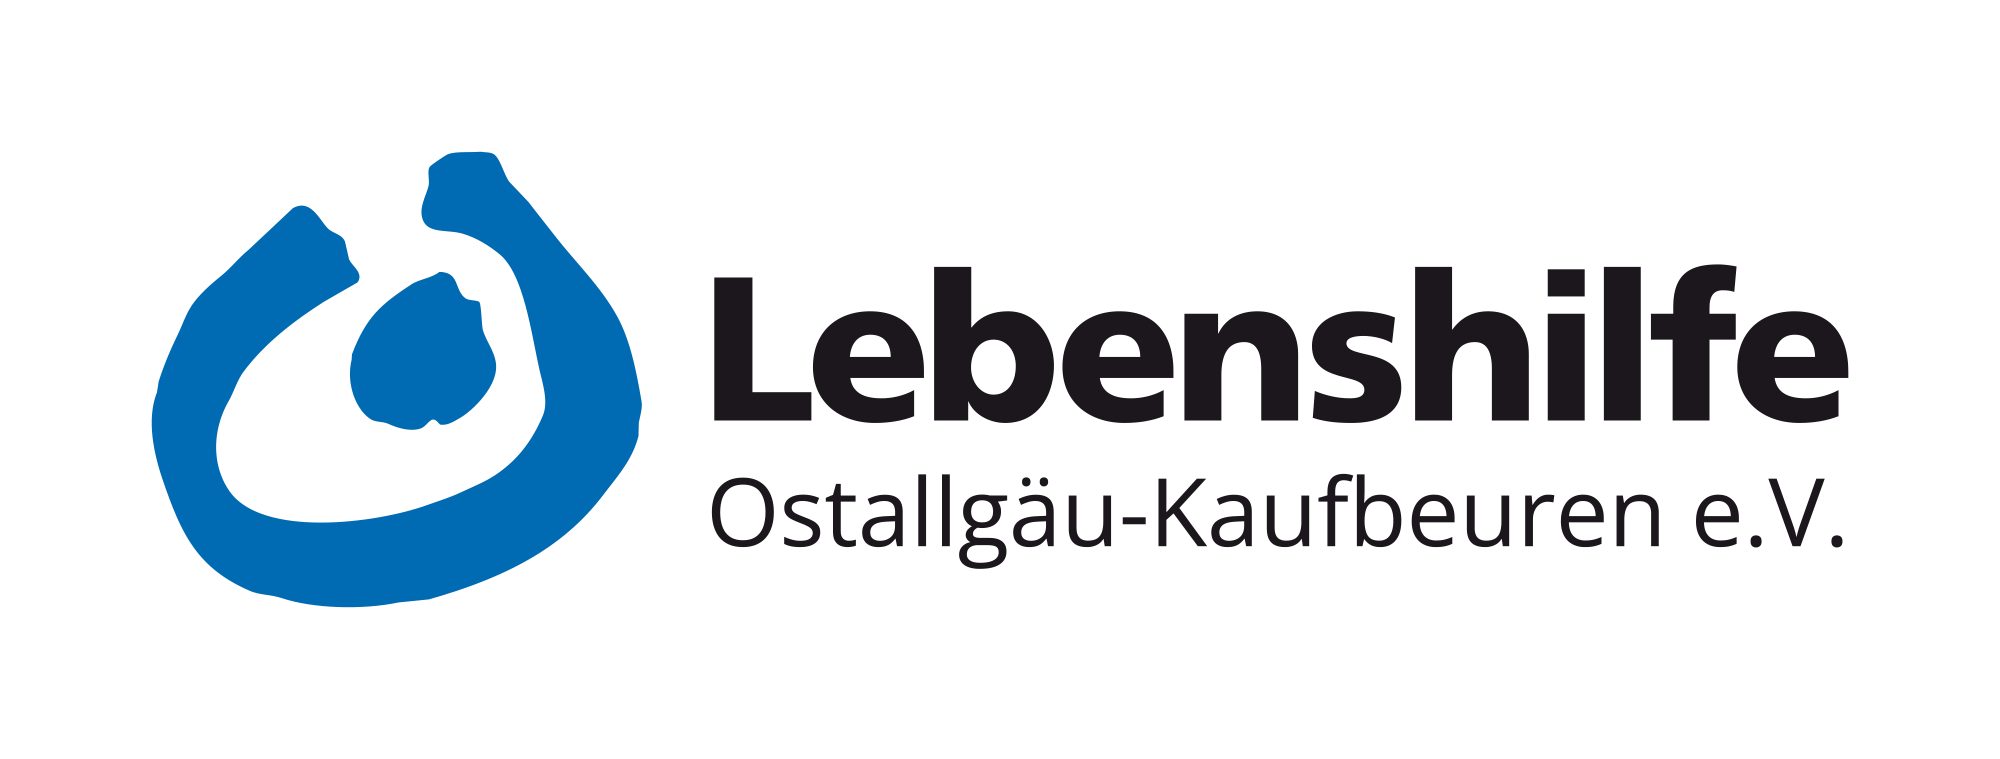 Logo der Lebenshilfe Ostallgäu-Kaufbeuren